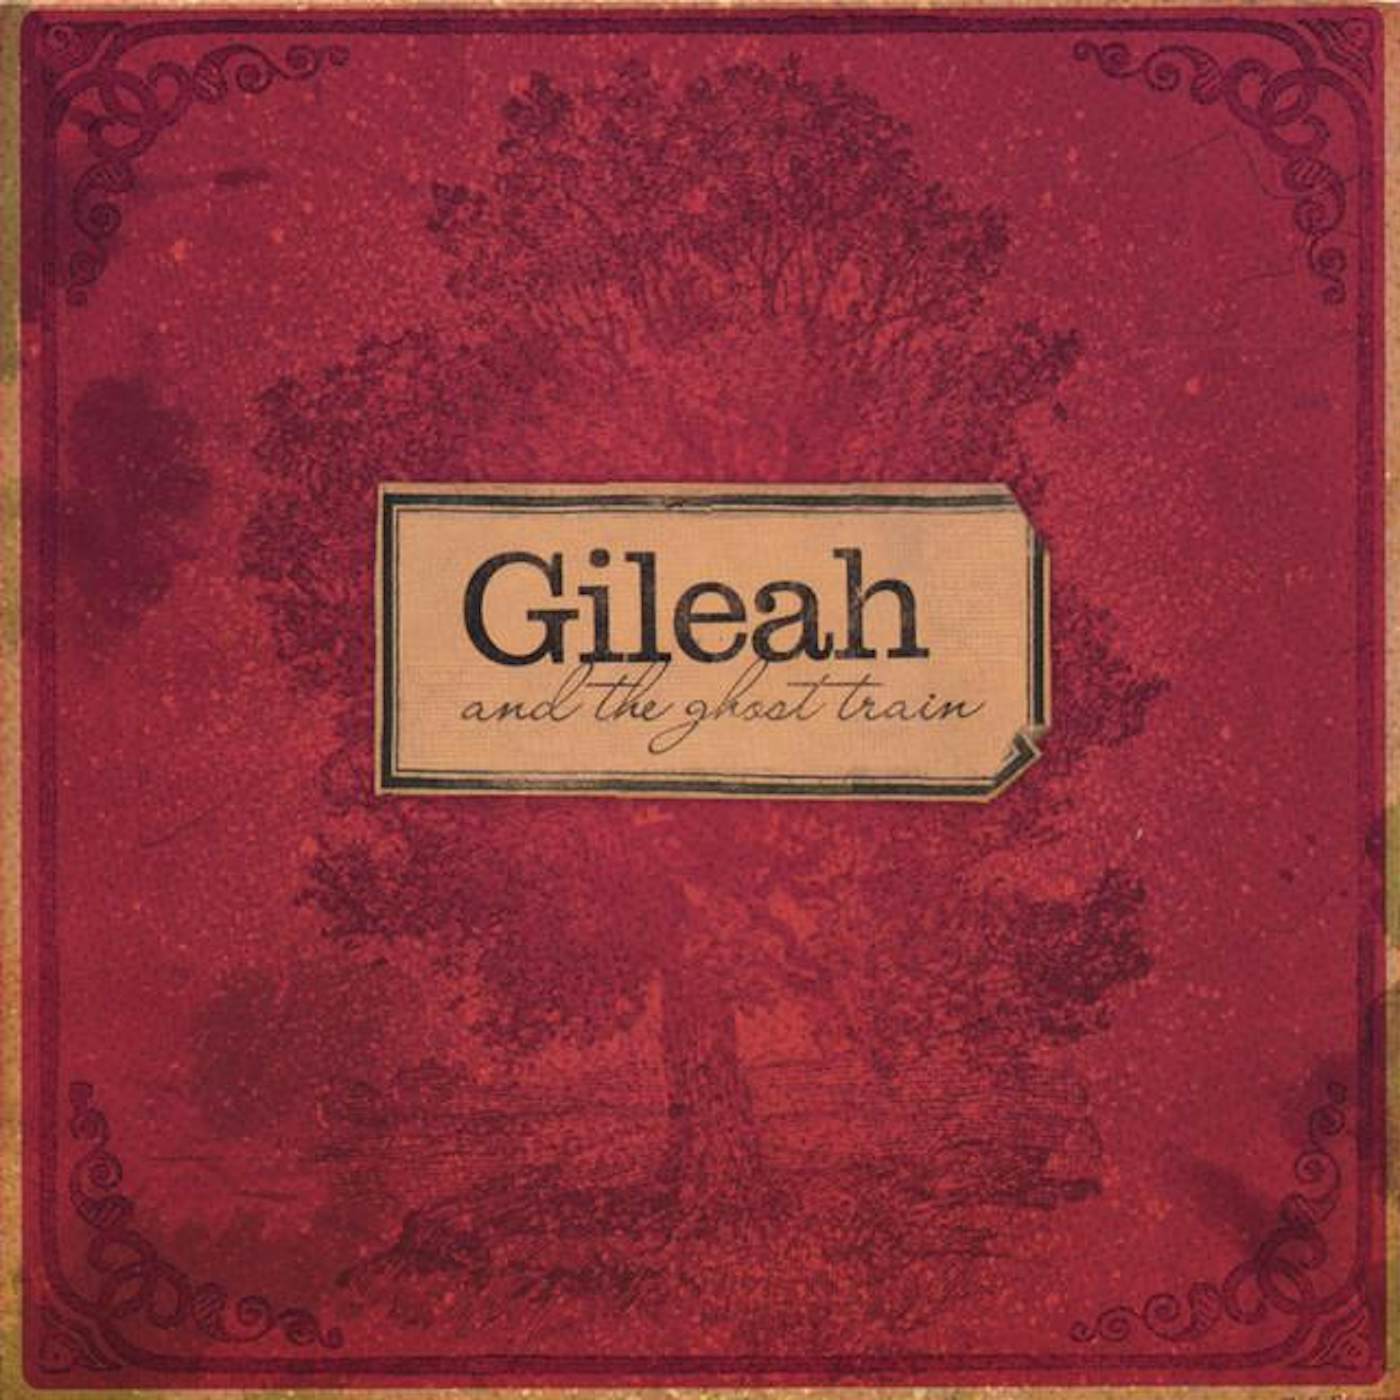 Gileah & The Ghost Train